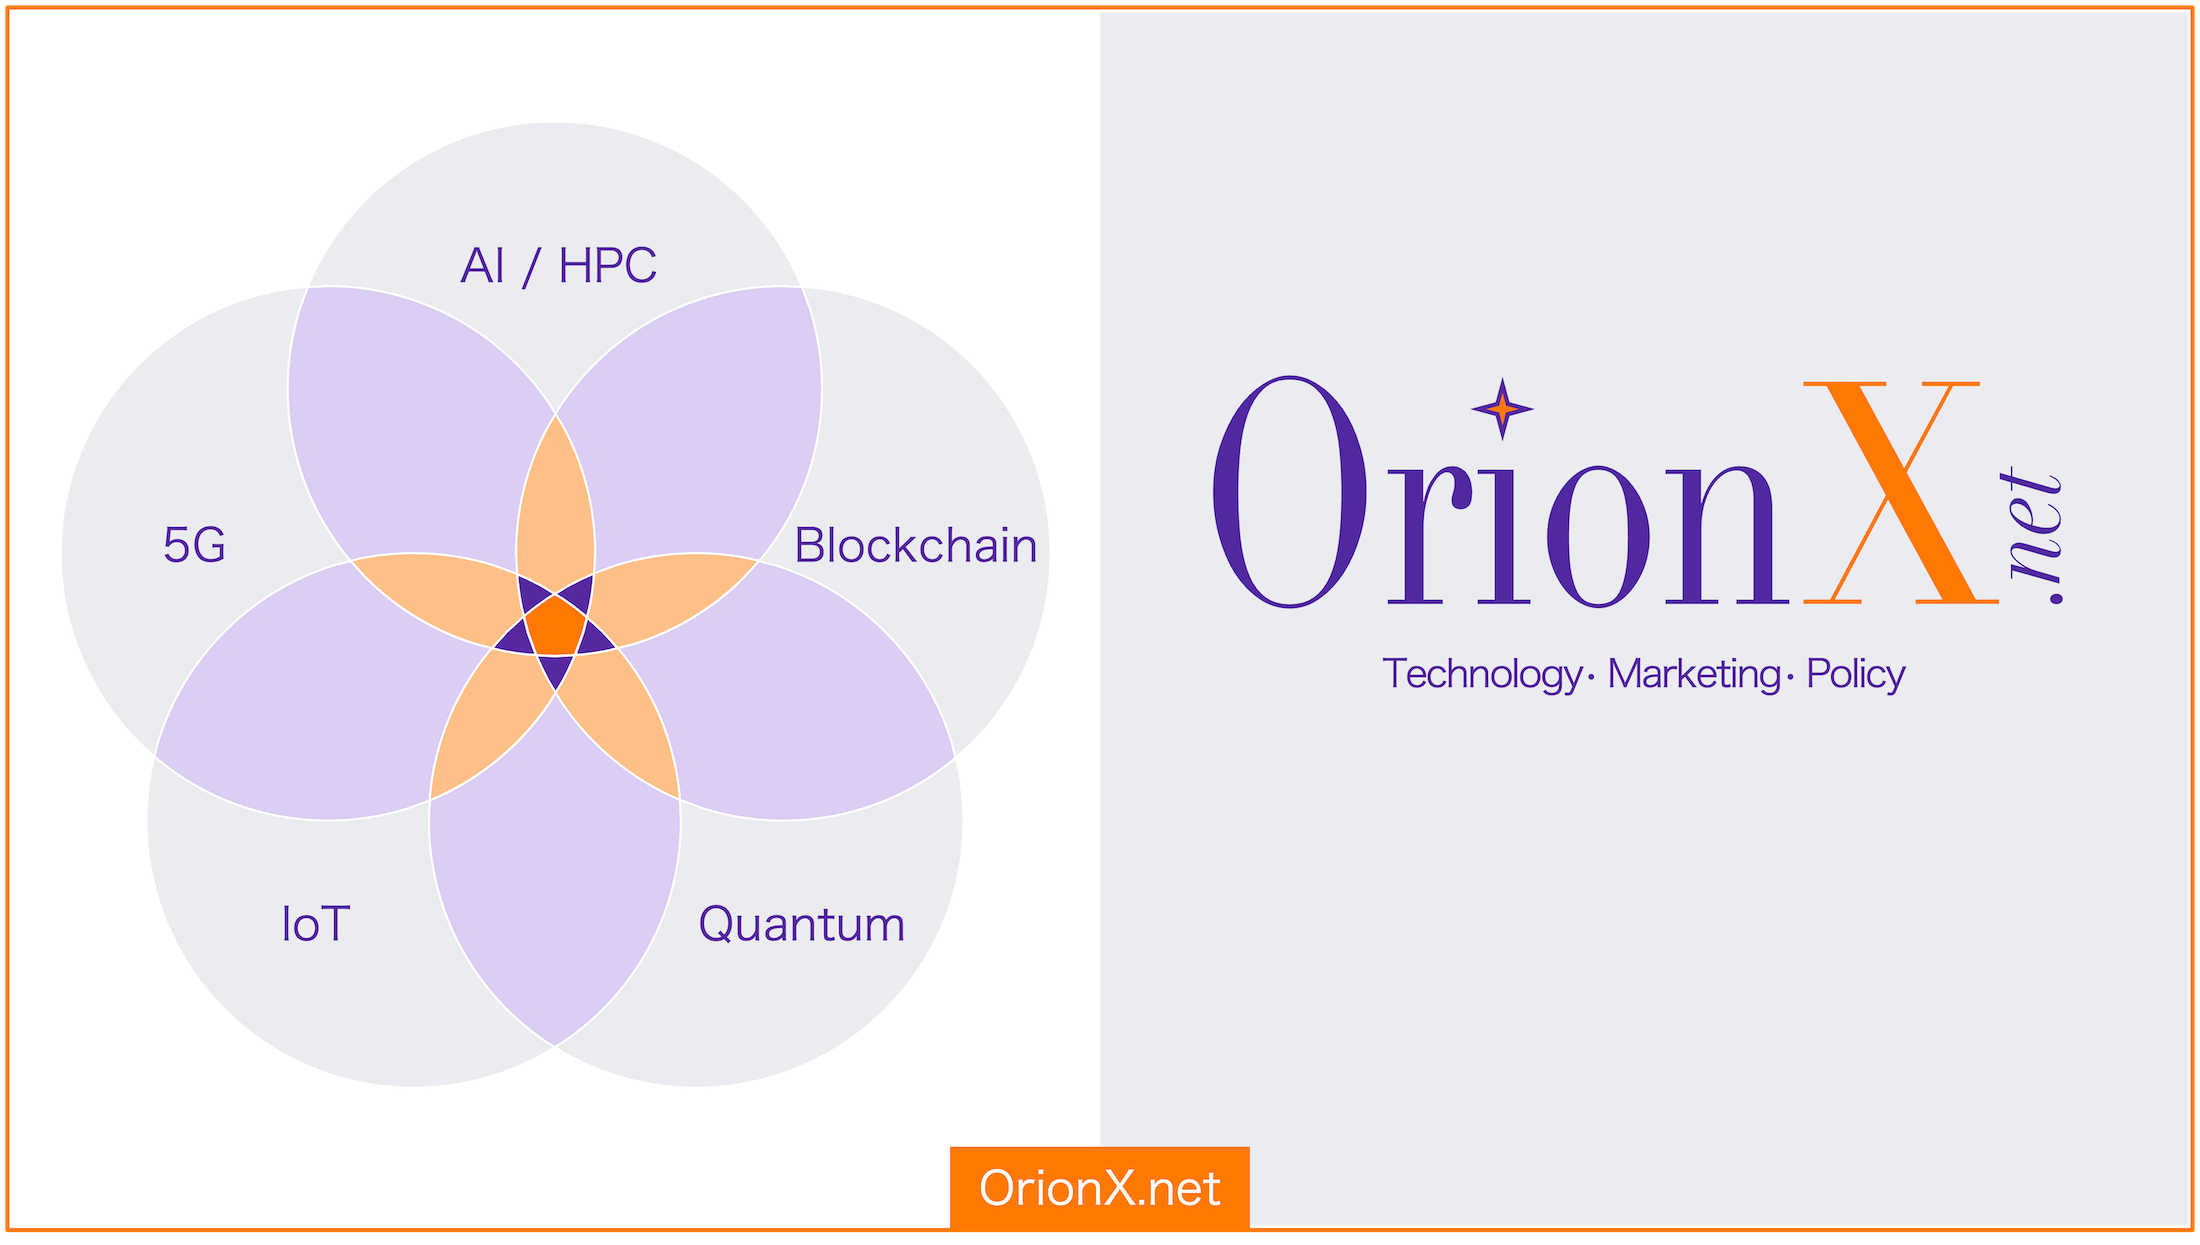 OrionX.net - Technology Marketing Policy